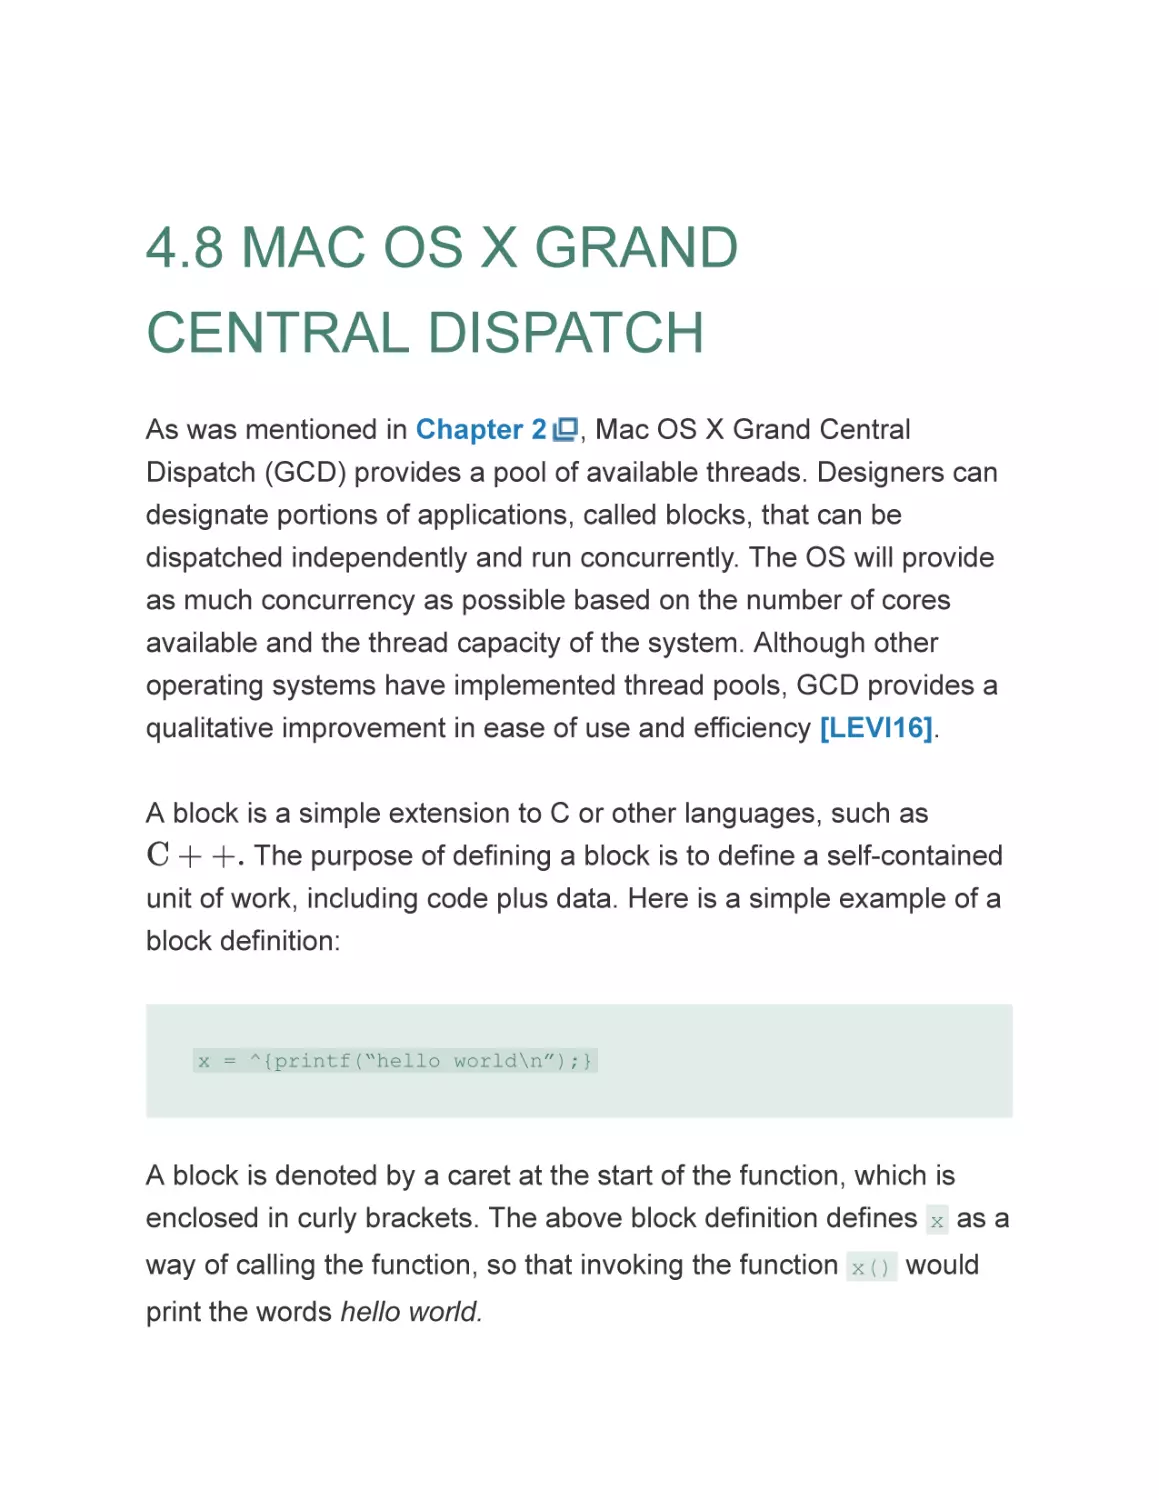 4.8 MAC OS X GRAND CENTRAL DISPATCH